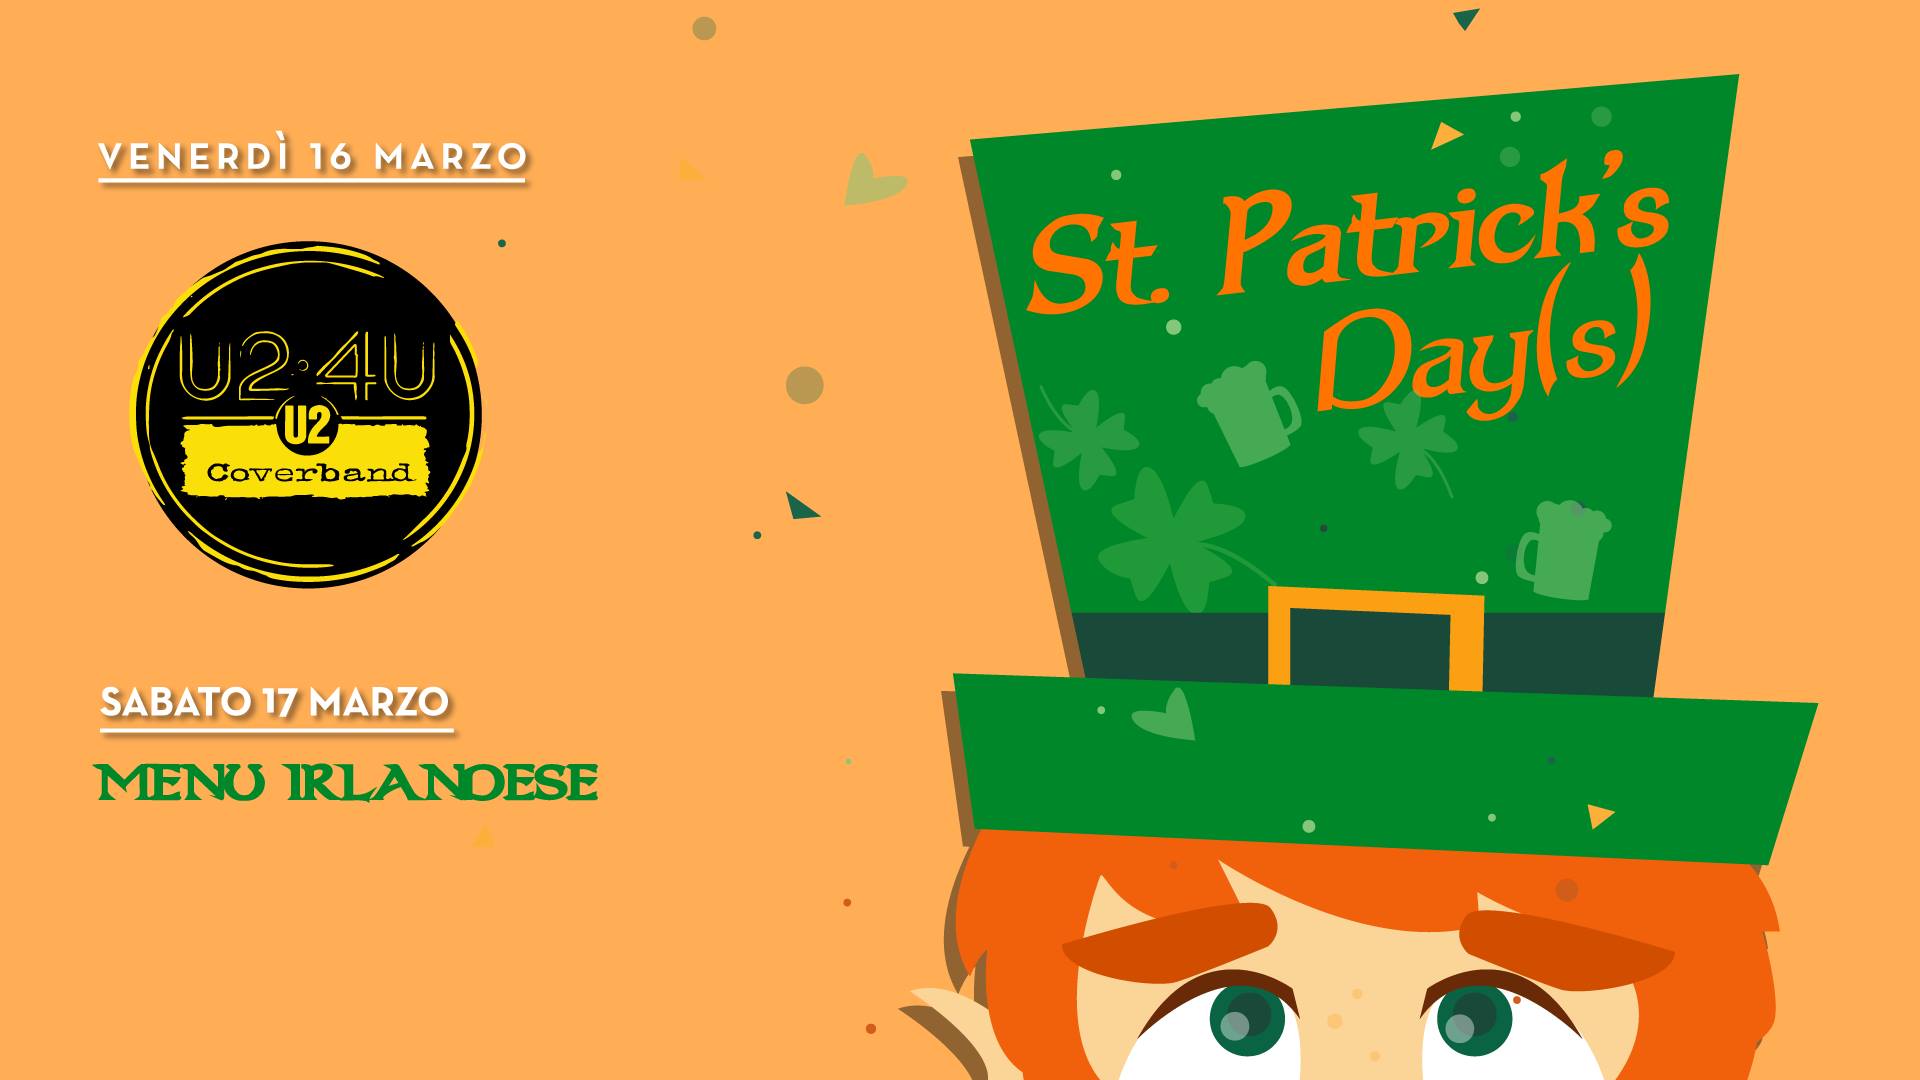 St. Patrick's Day(s) - Dinamo - Taranto